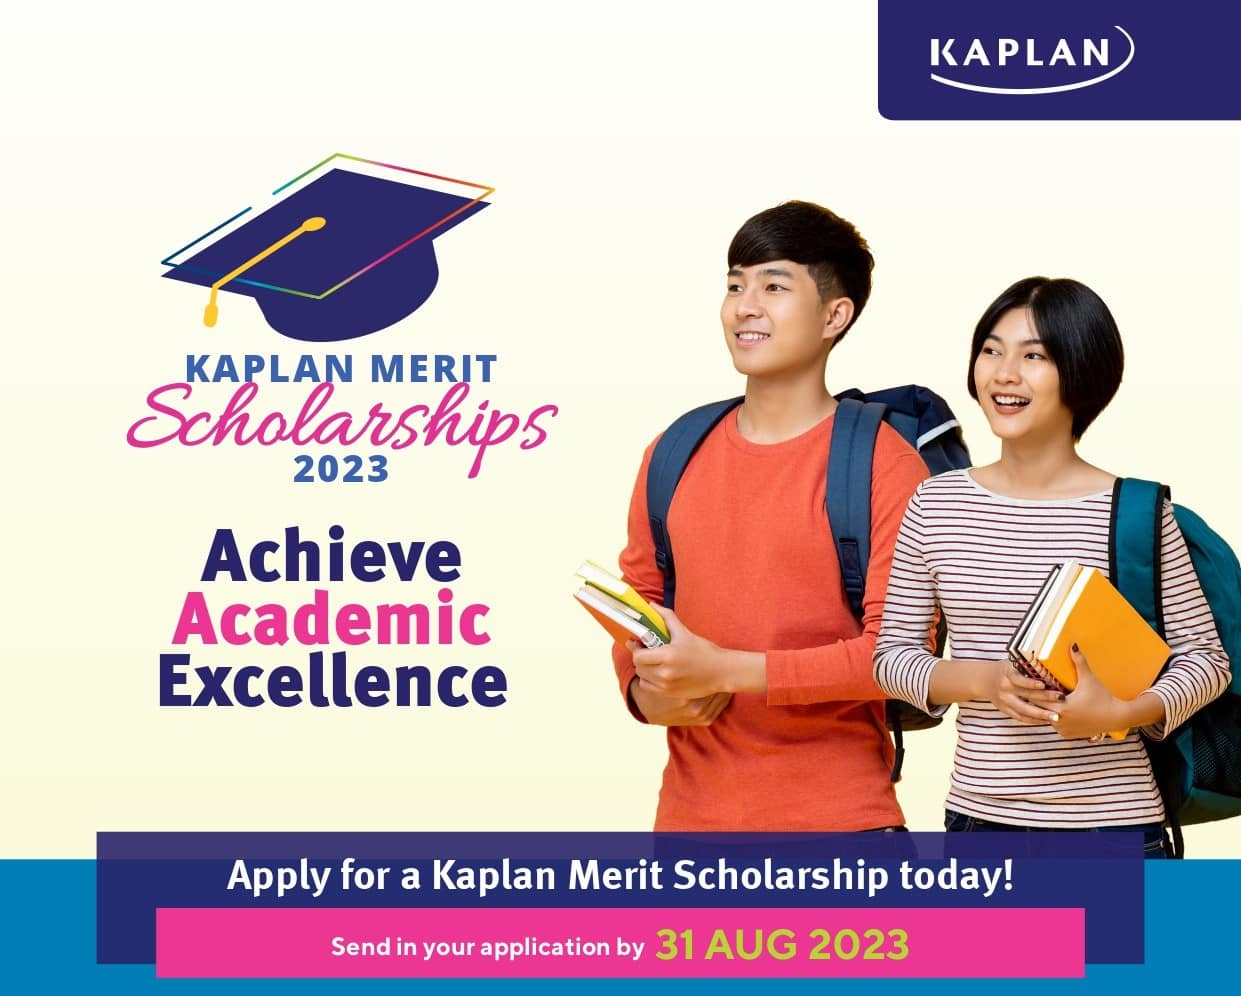 hoc bong kaplan singapore 2023 - Quà tặng Ipad Mini 64G cho học sinh nhập học tại Kaplan Singapore